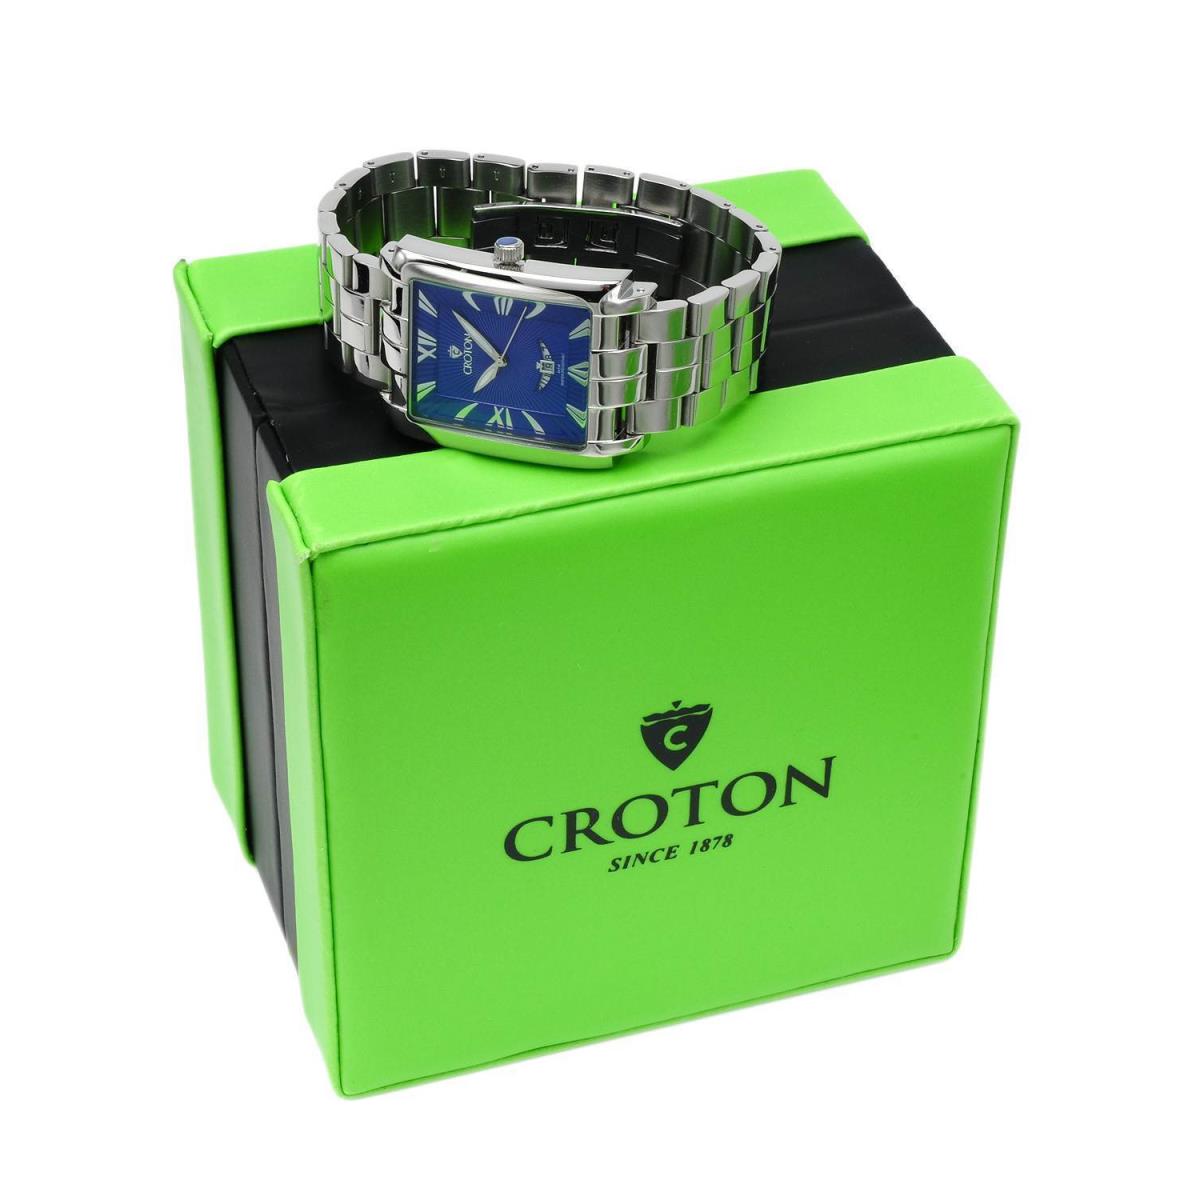 Croton cn307374ssbl Gentlemens Date Watch